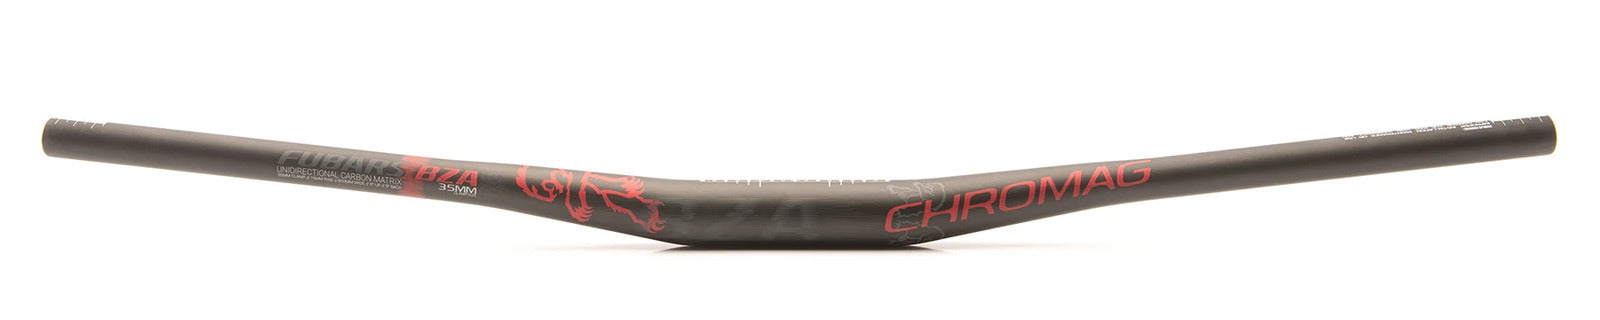 CHROMAG Fubars BZA 35mm Clamp, Carbon Fibre, 800mm wide, 35mm rise